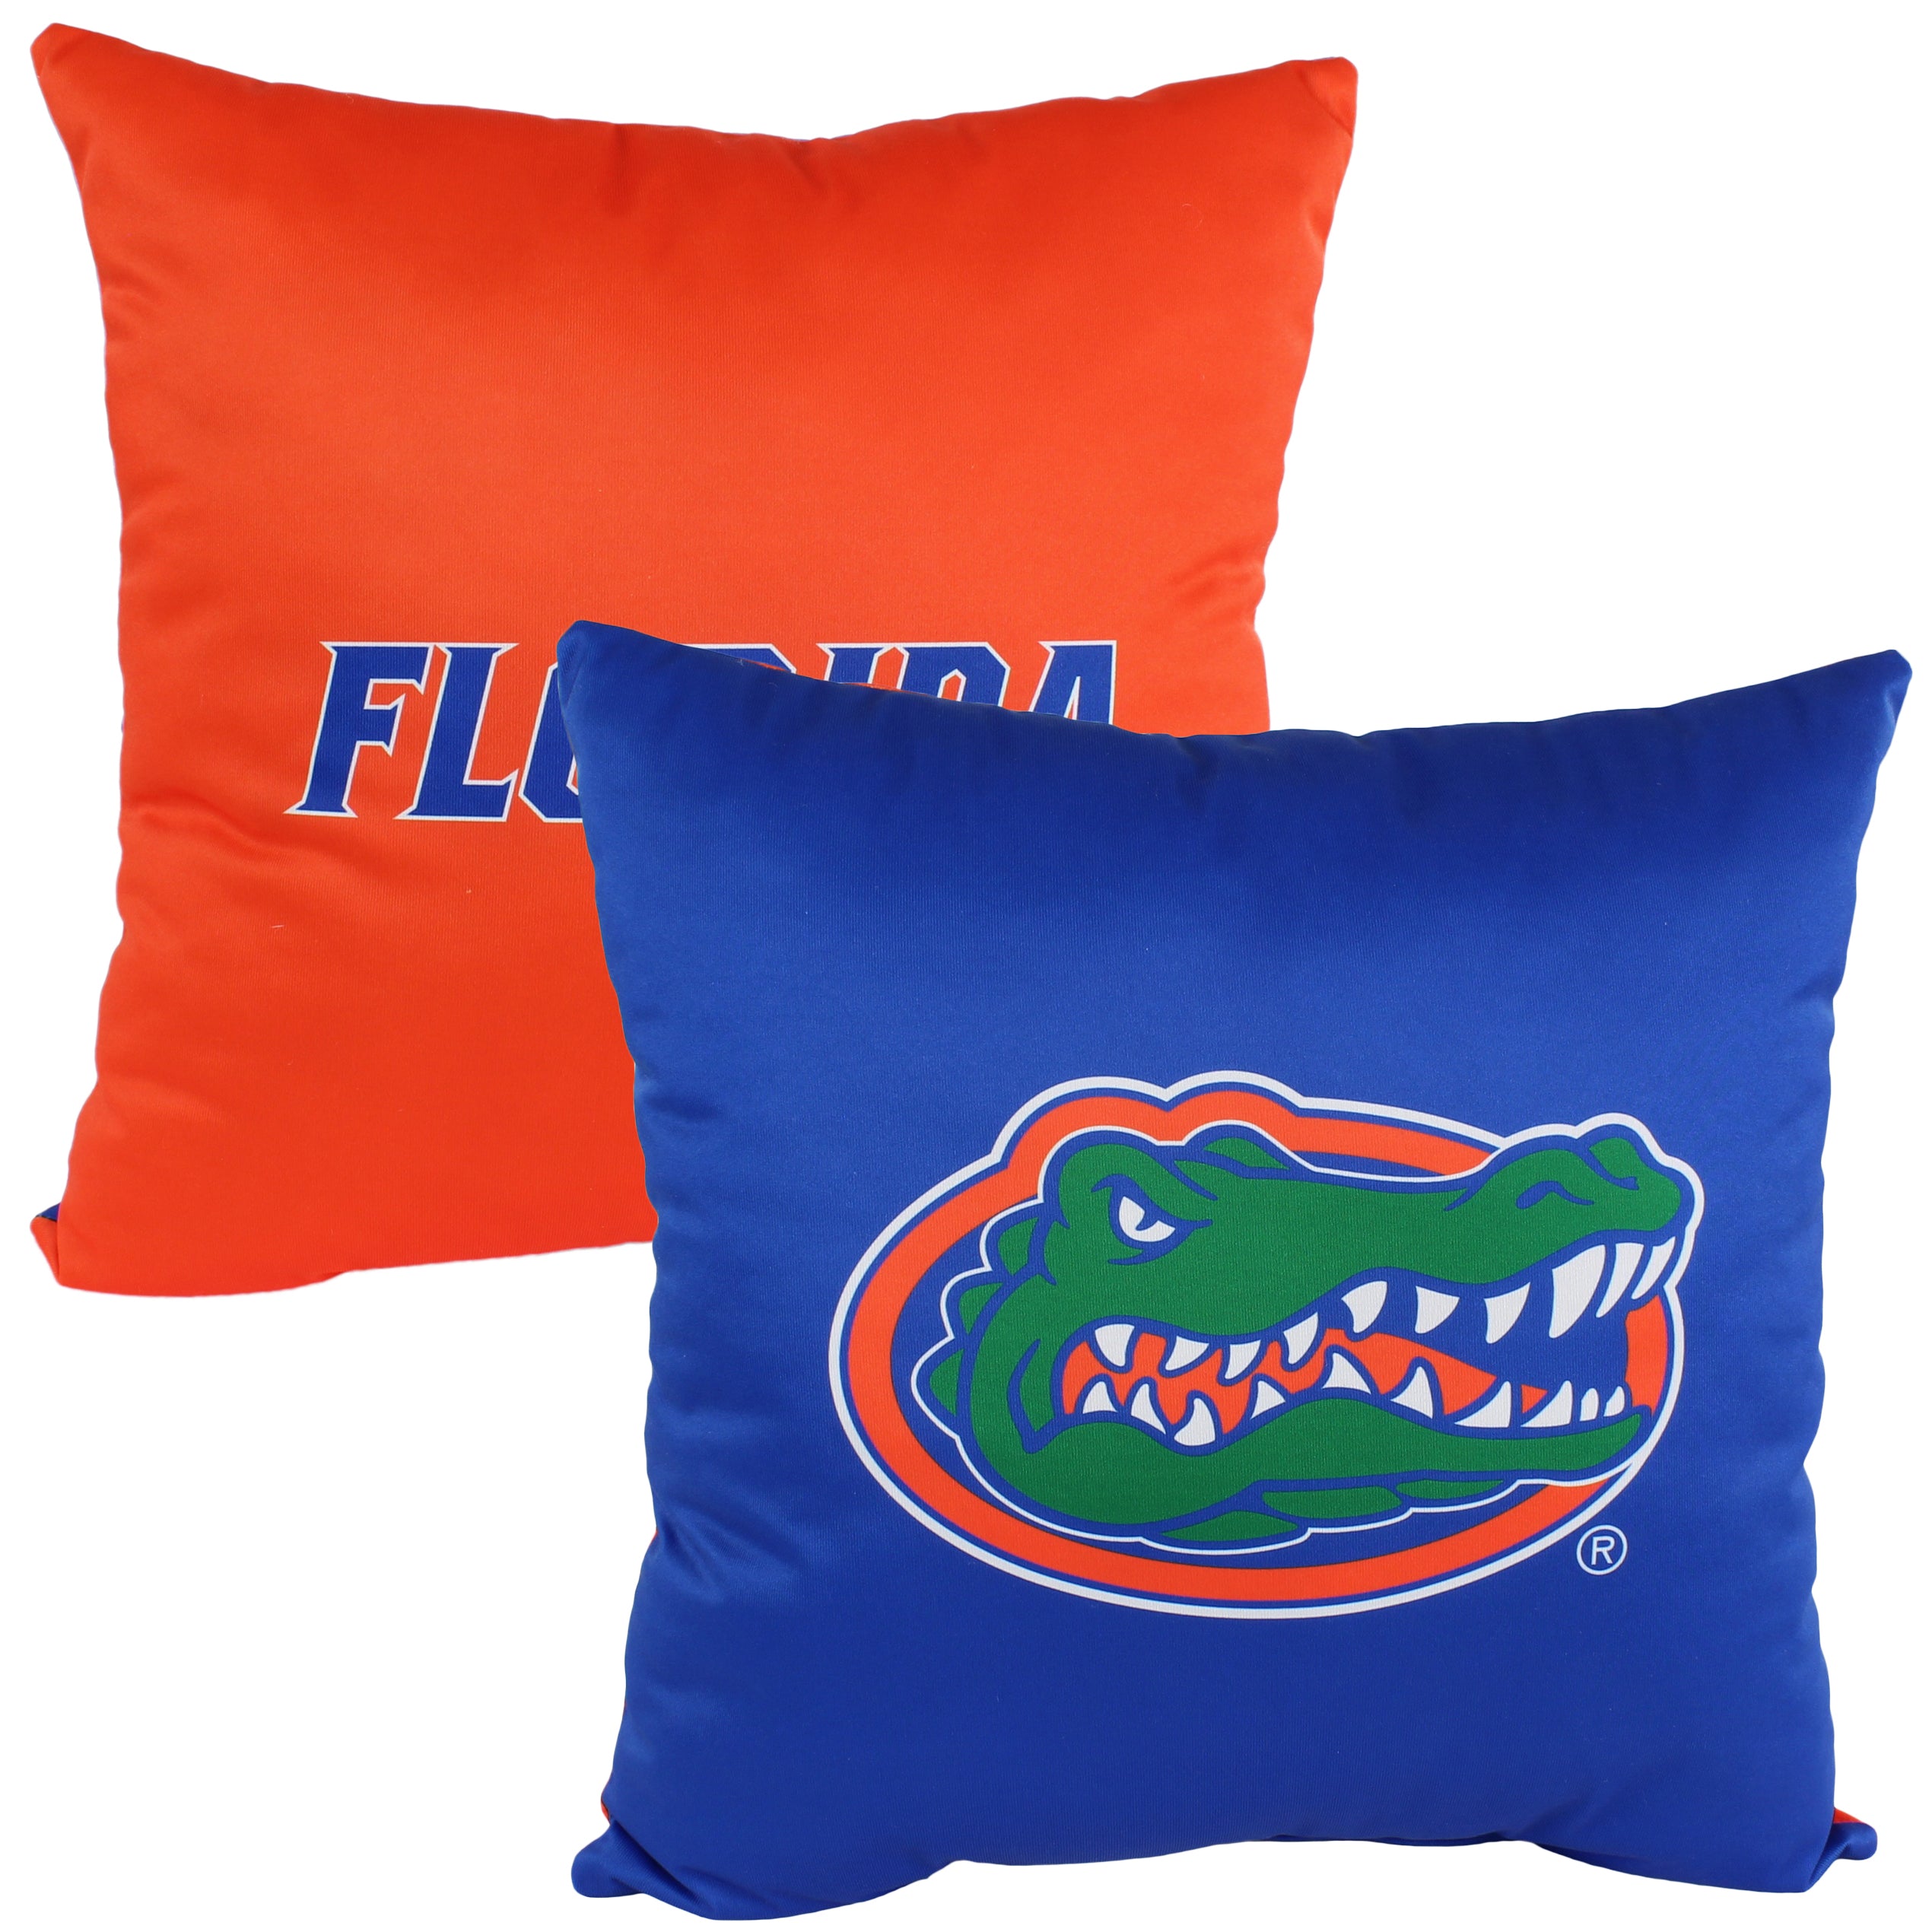 Florida Gators 16 inch Reversible Decorative Pillow - image 4 of 4